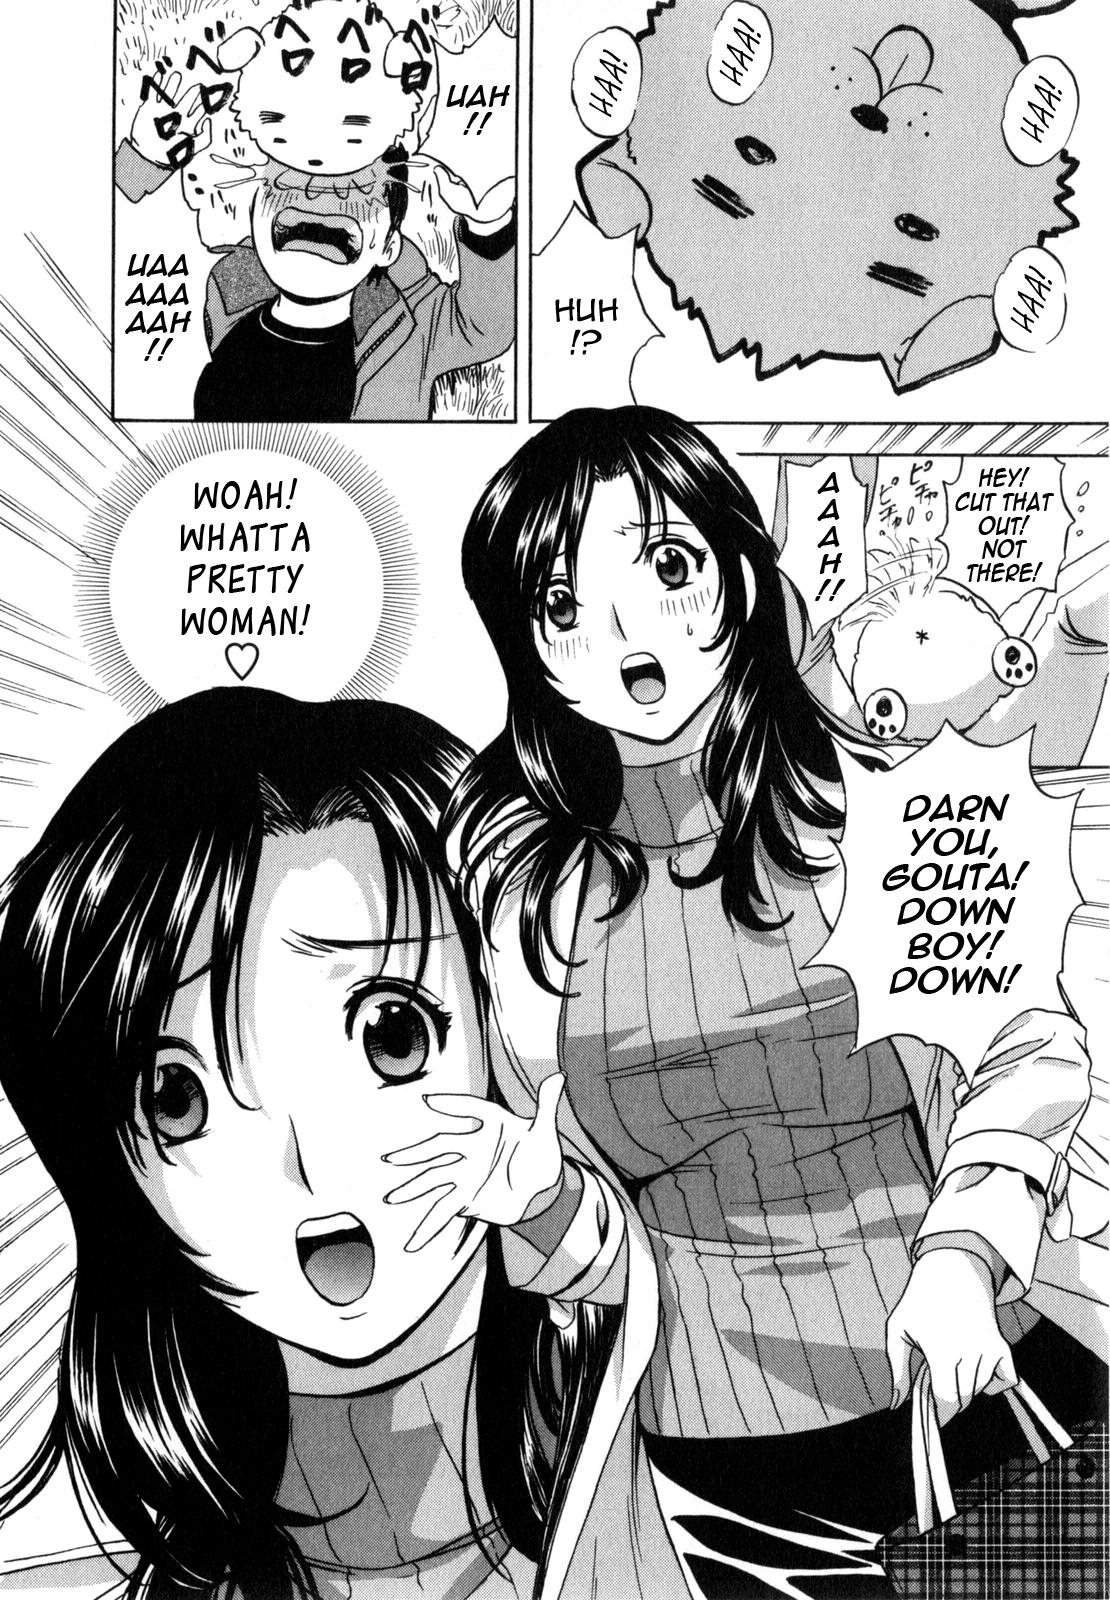 [Hidemaru] Life with Married Women Just Like a Manga 1 - Ch. 1-3 [English] {Tadanohito} 10